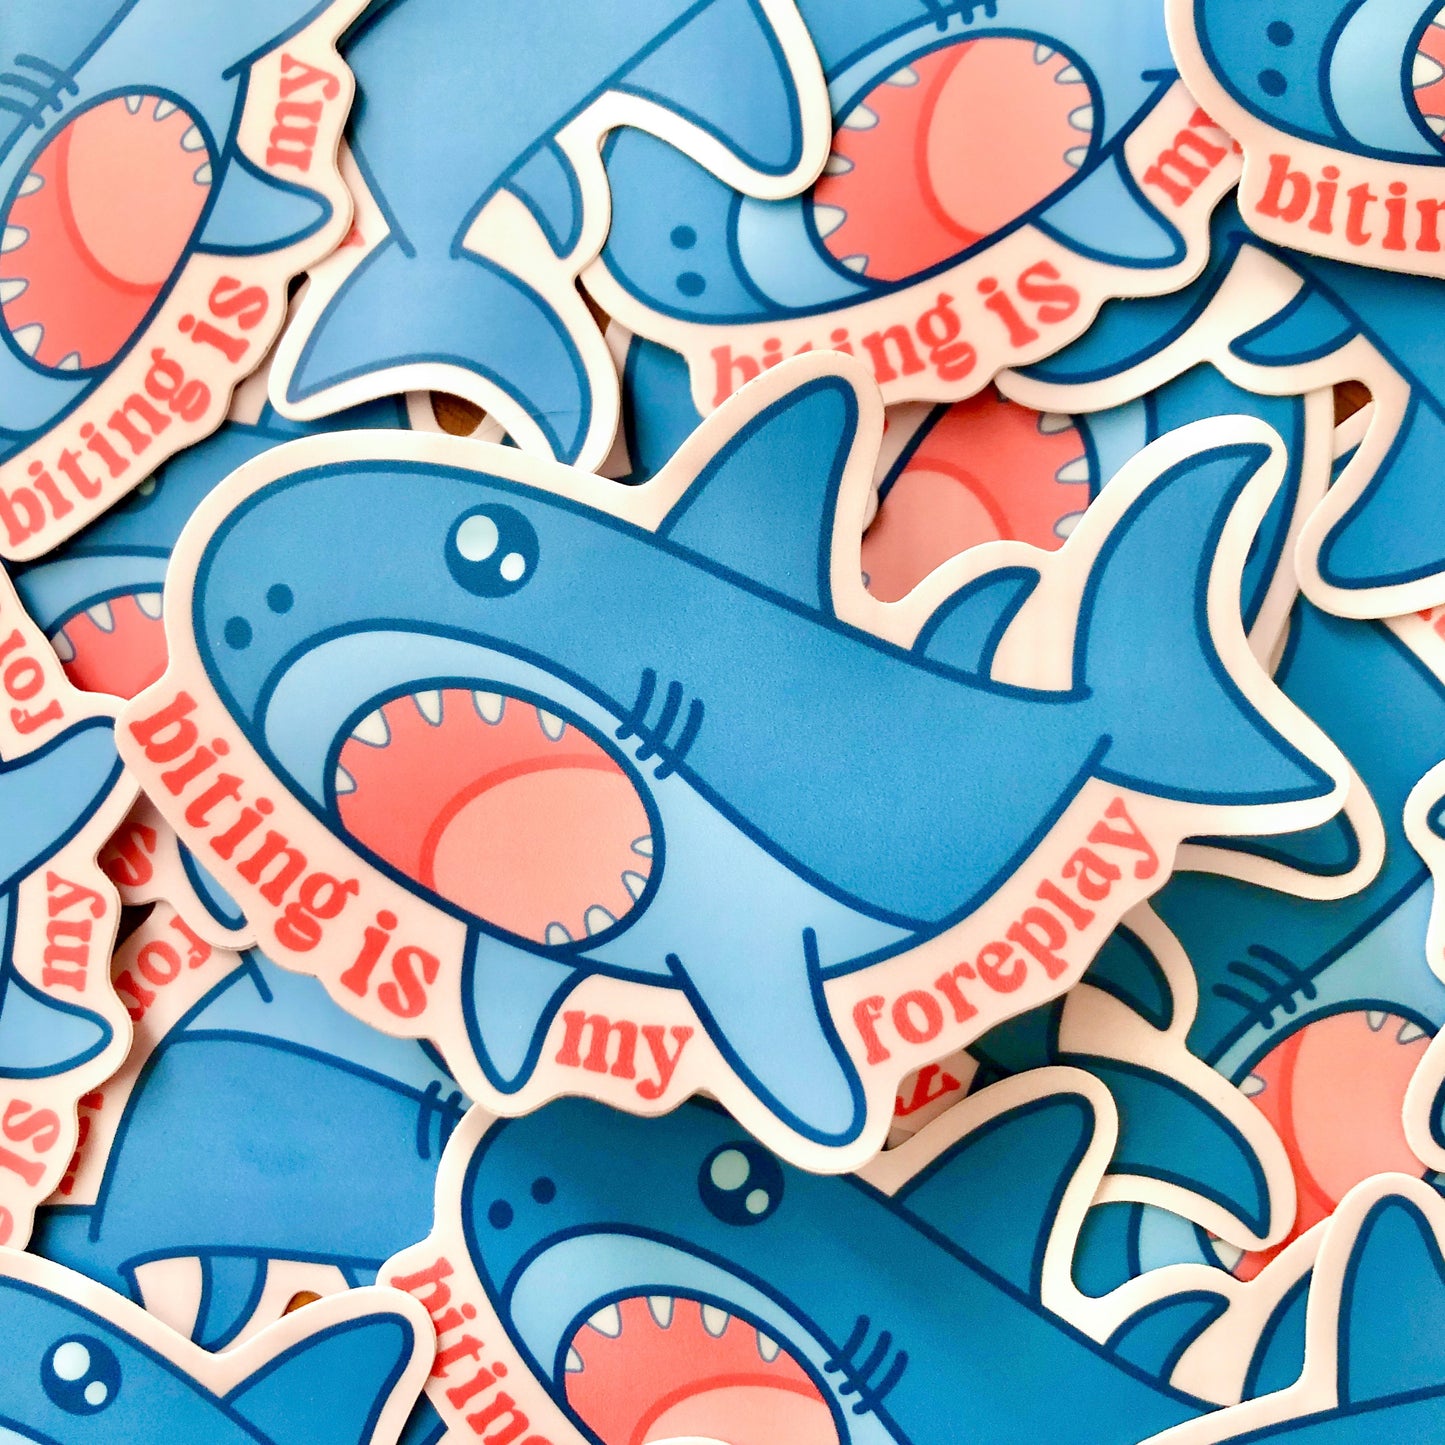 Biting is my Foreplay Shark Vinyl Sticker